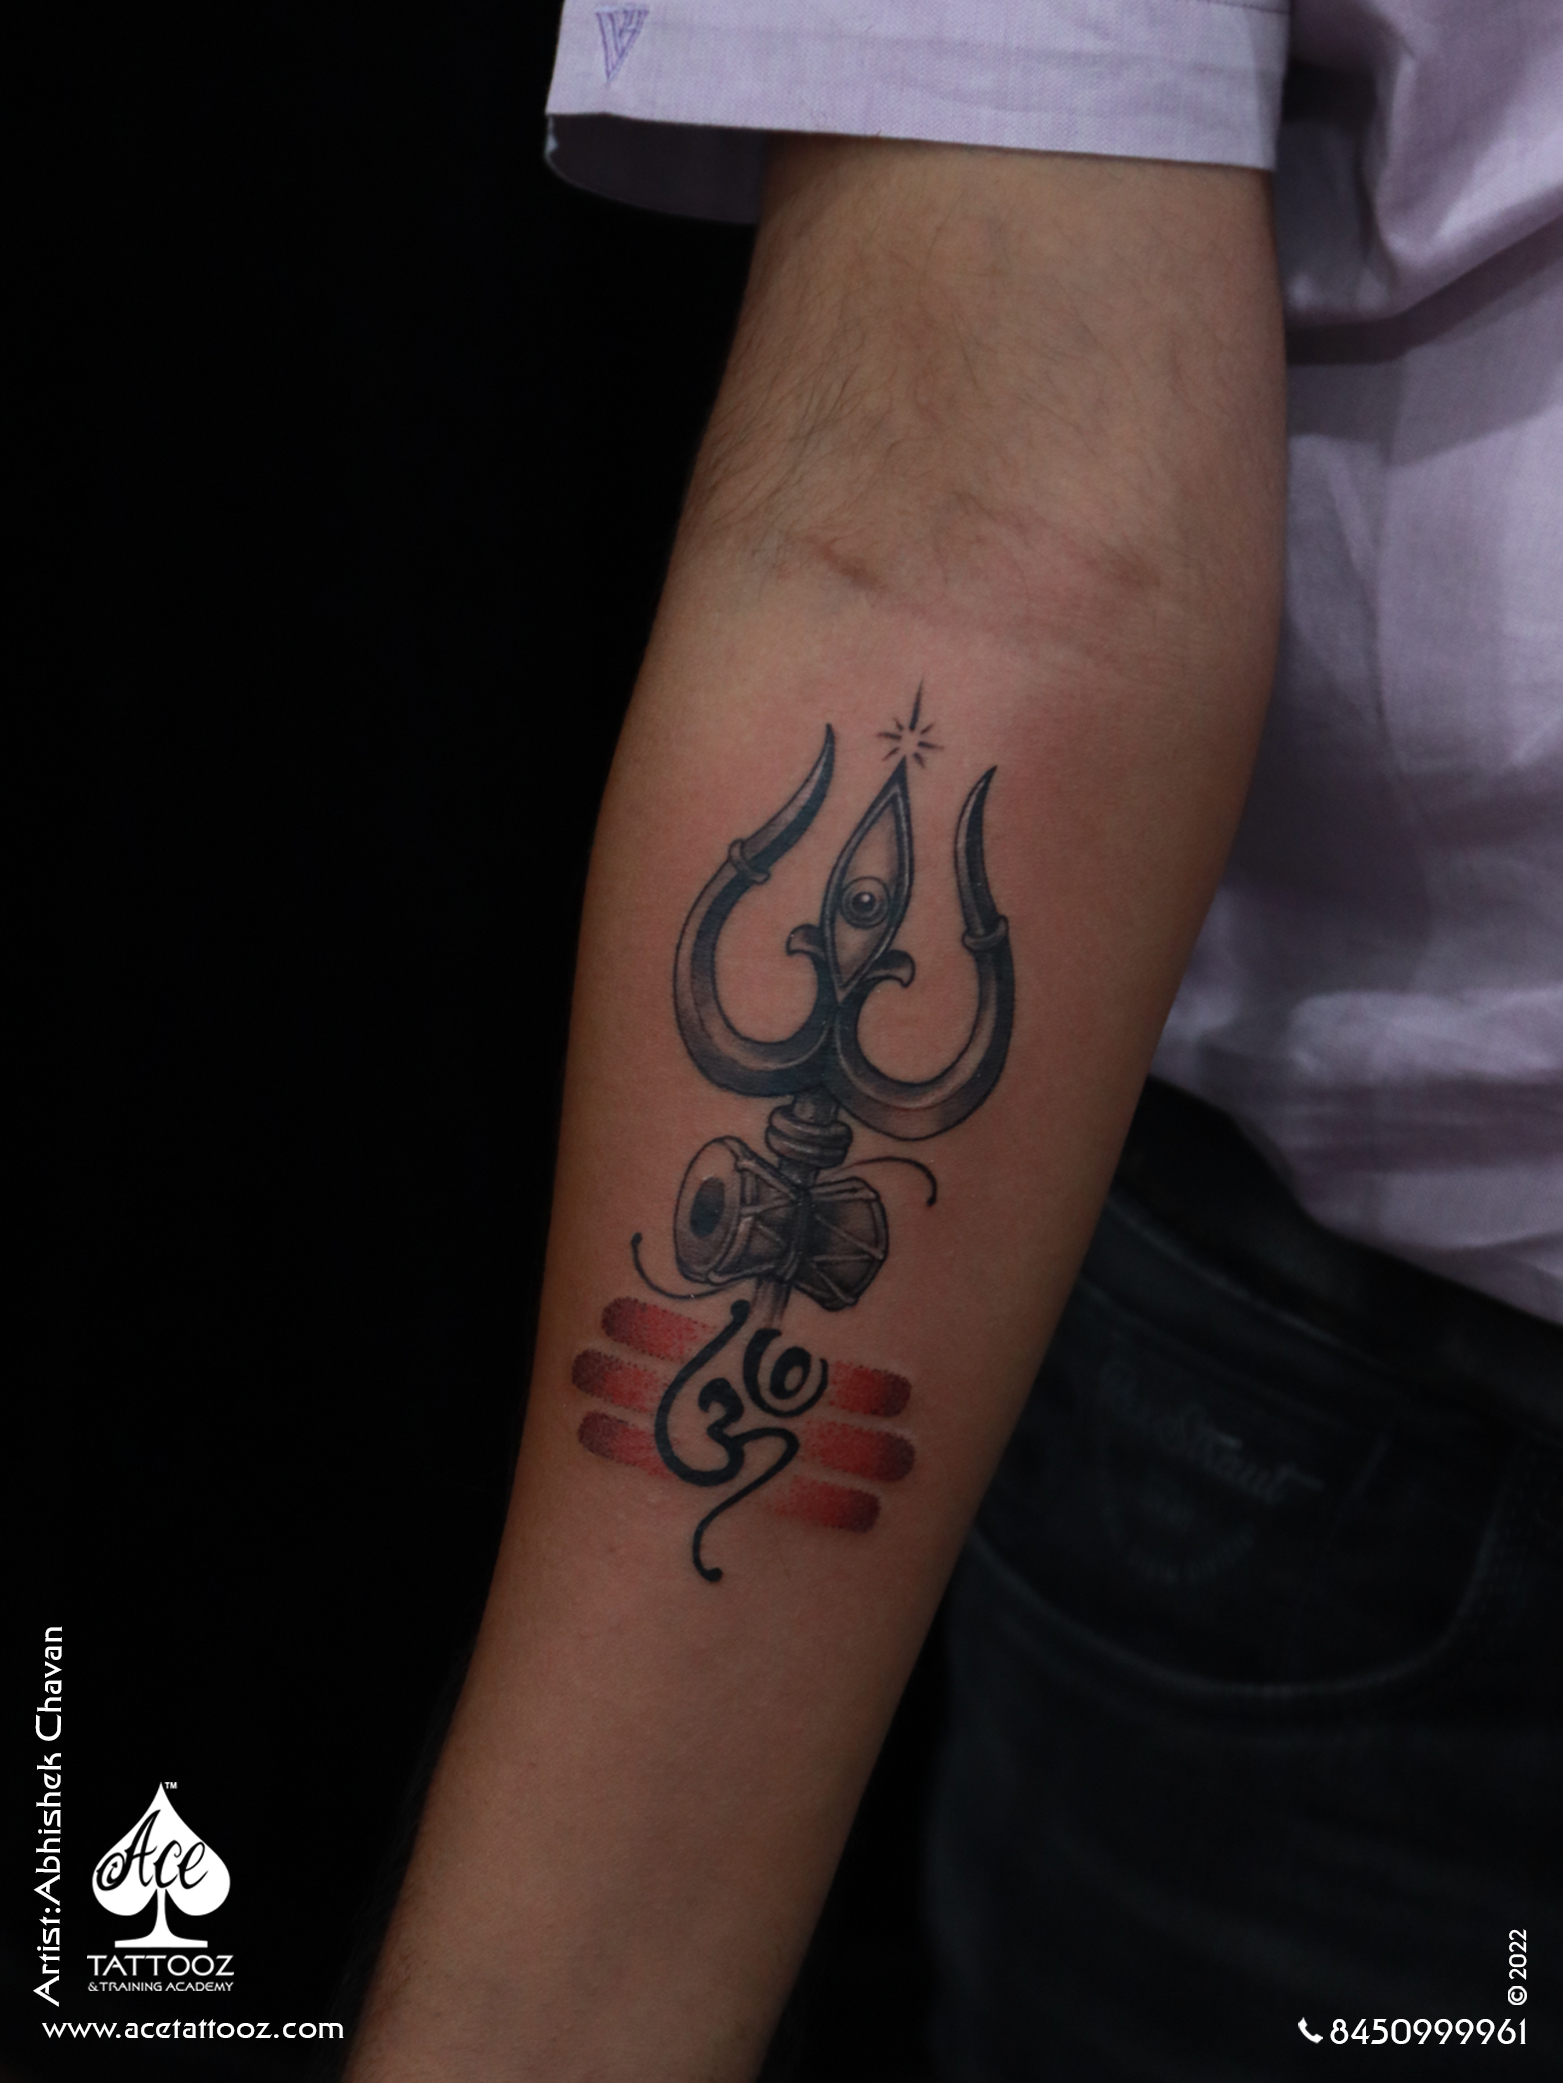 Amazing Trishul Tattoo by Omkar Pawar. :: Behance